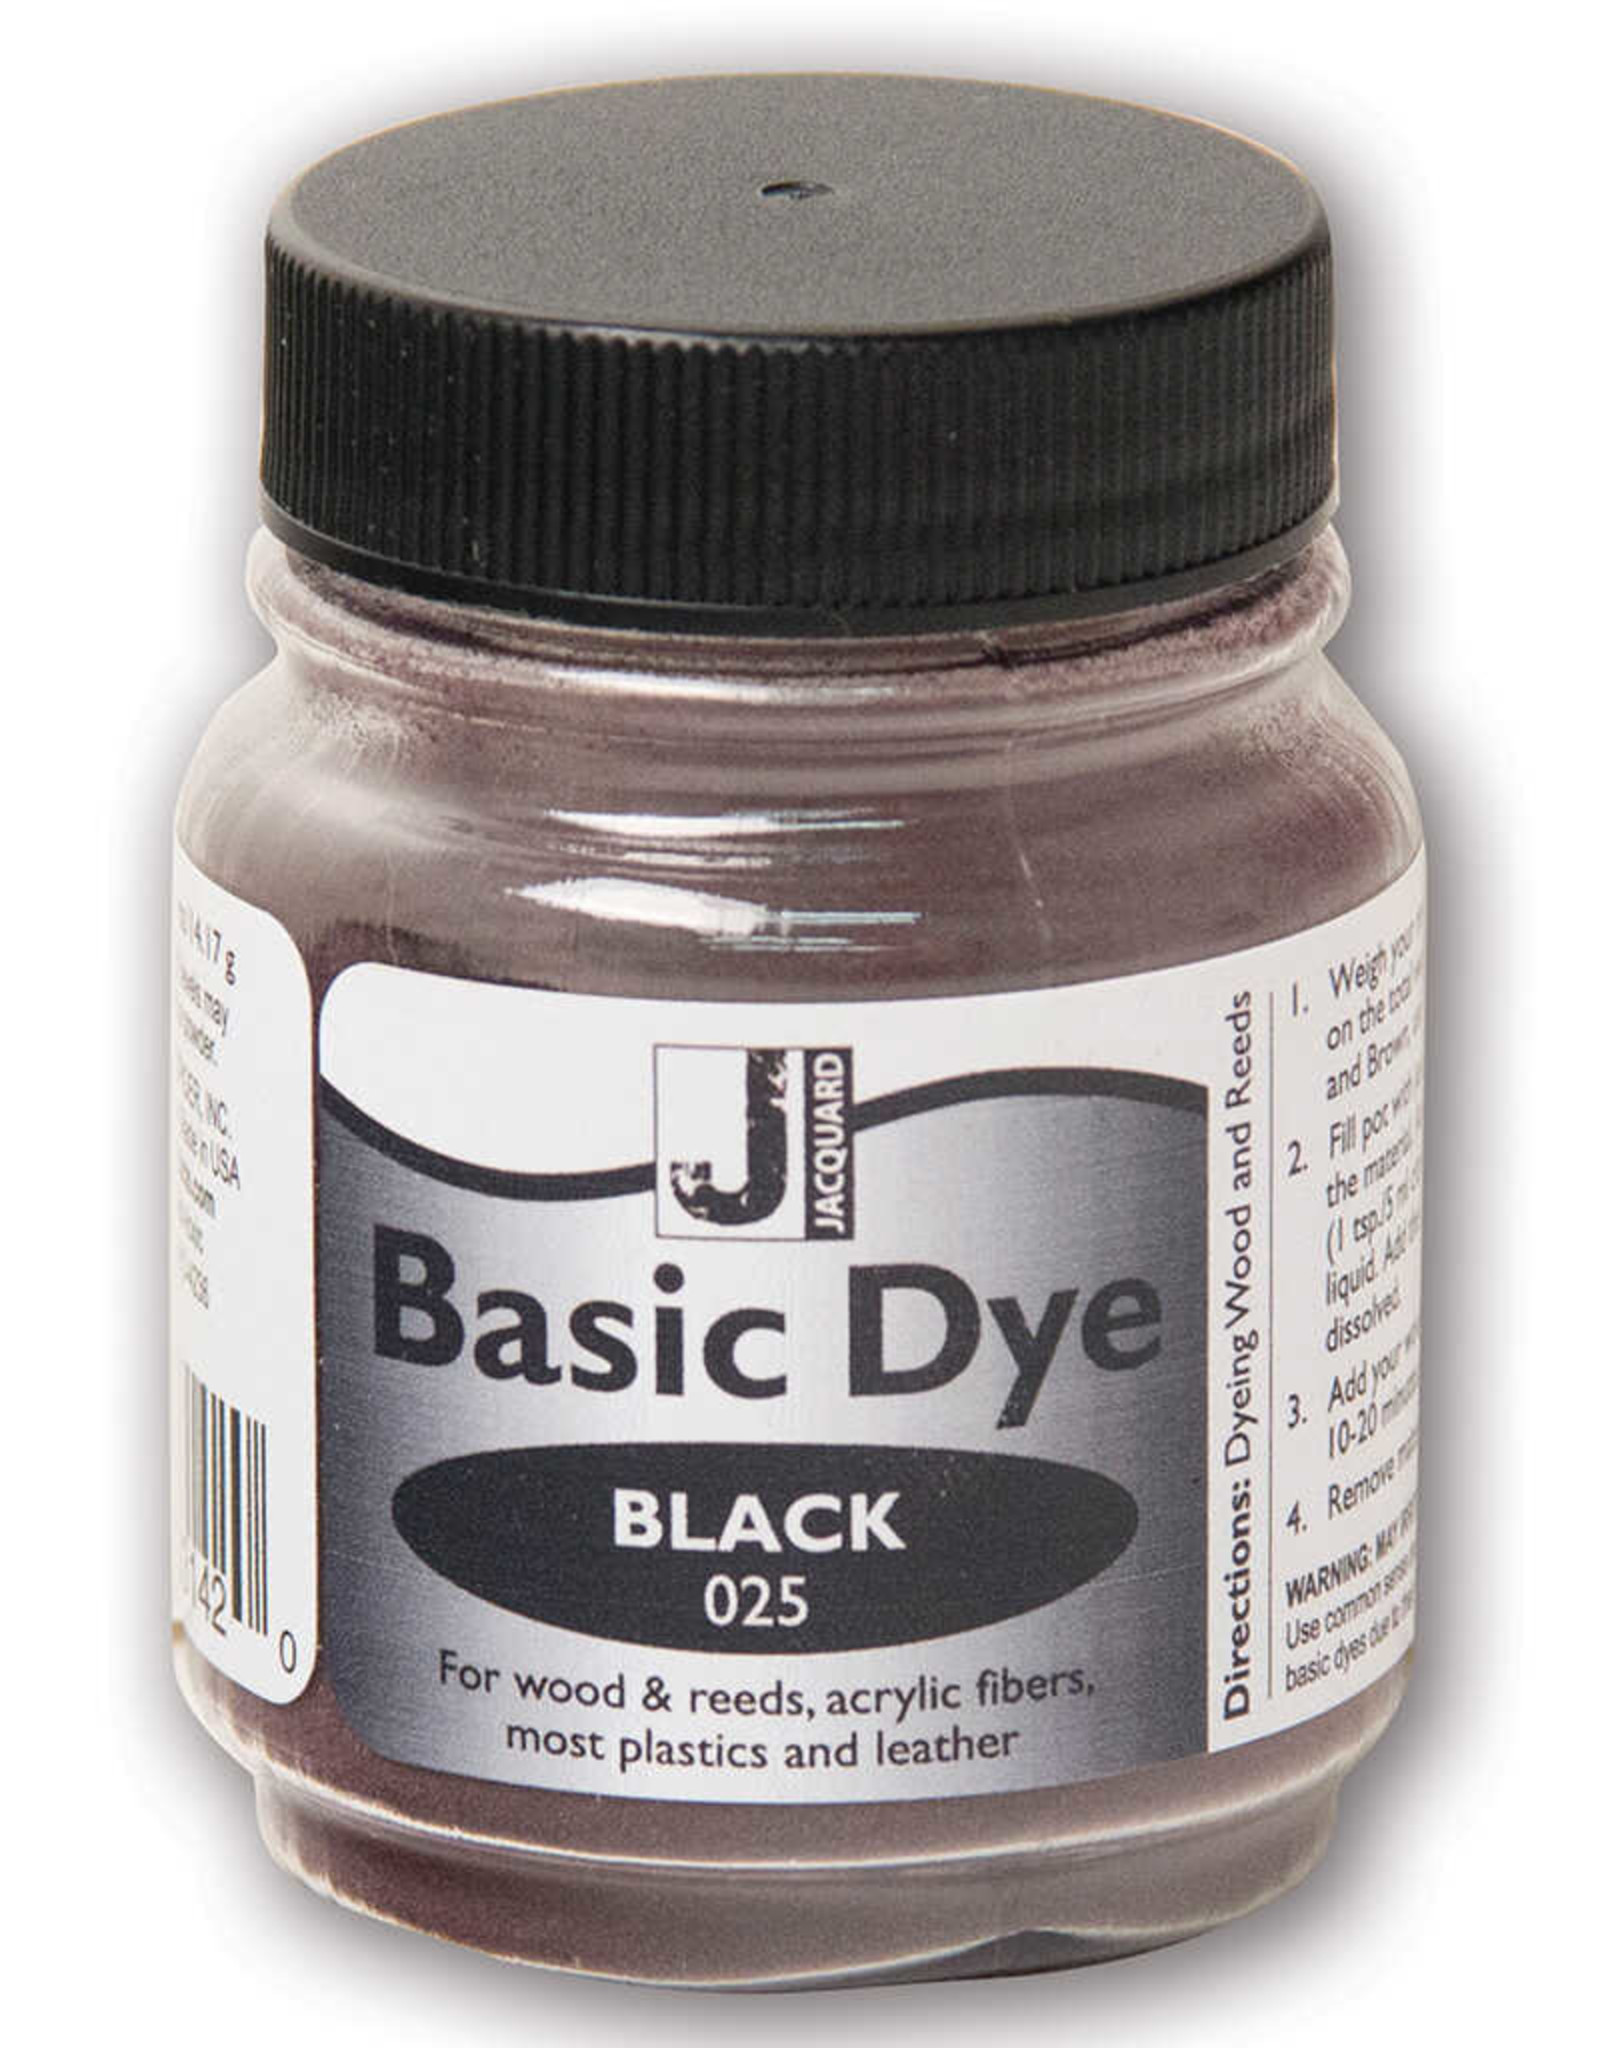 Jacquard Products Jacquard Basic Dye Black